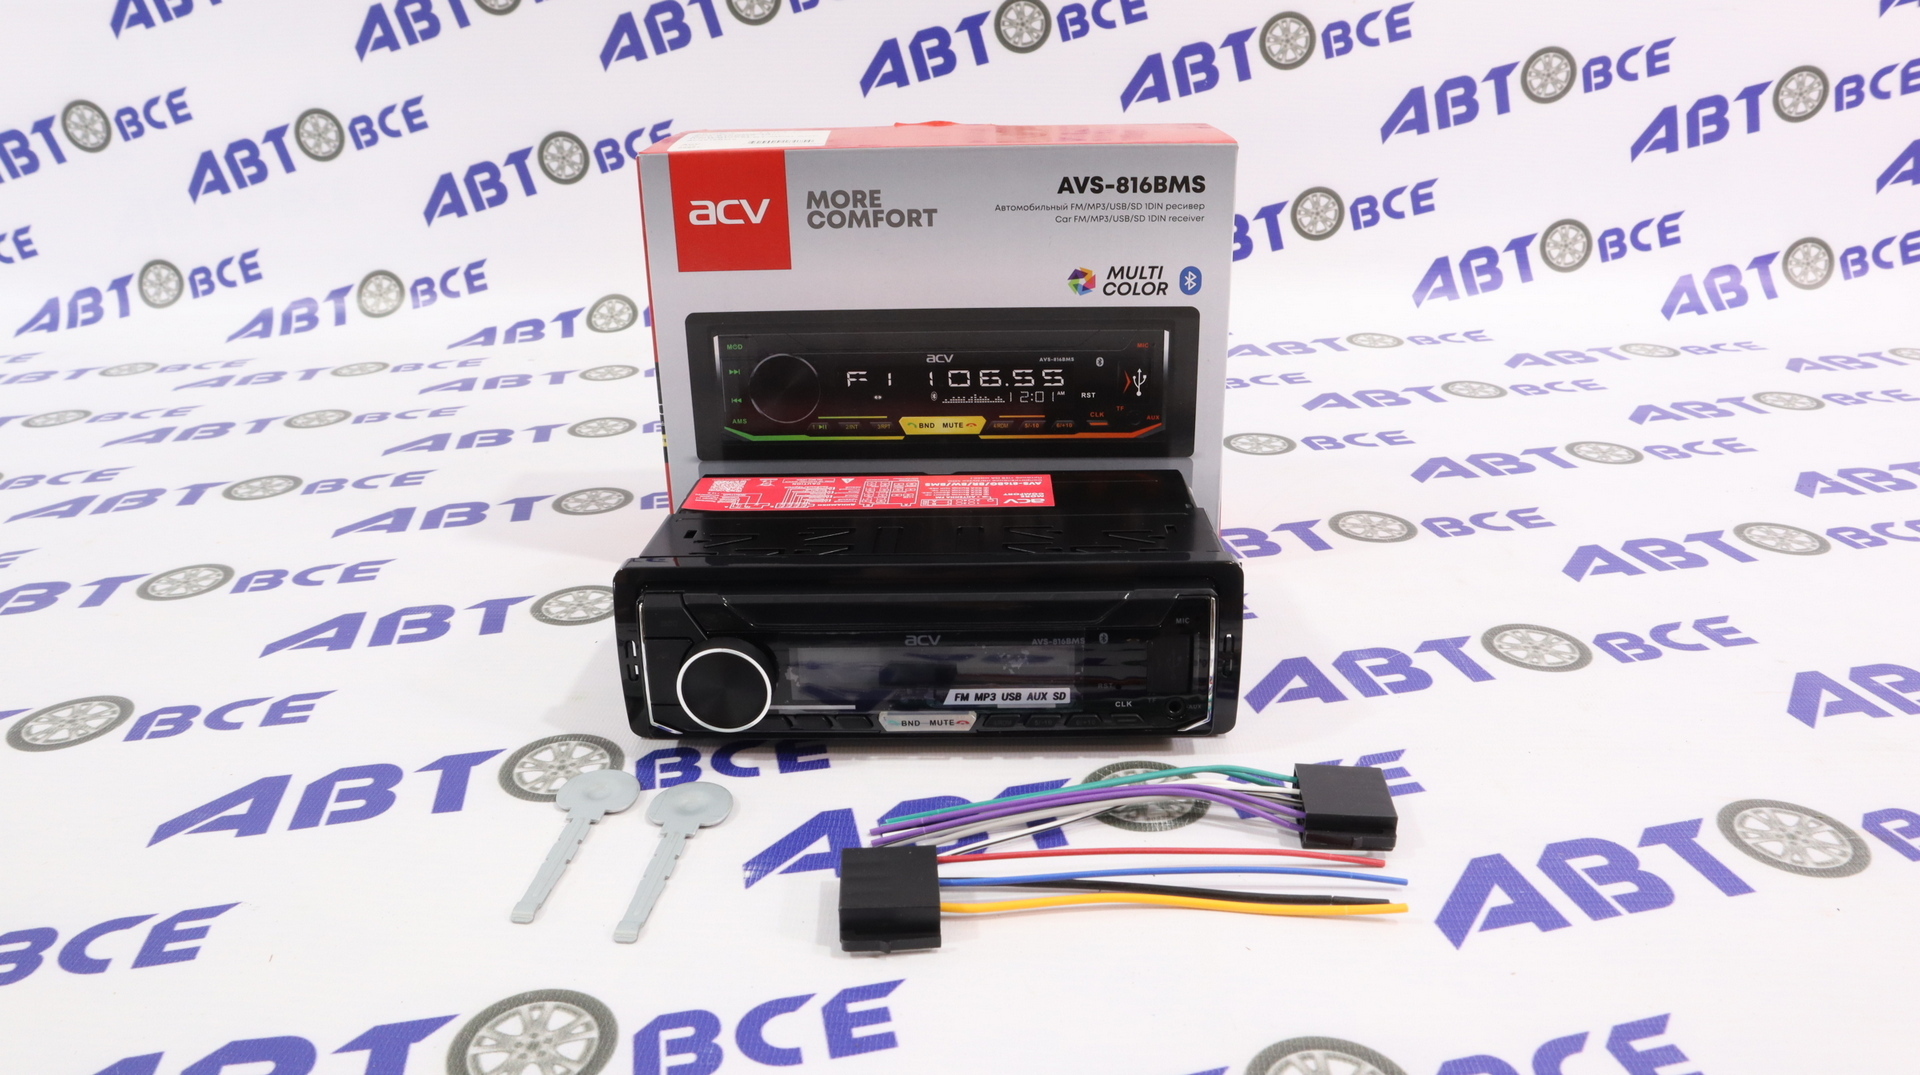 Автомагнитола (магнитофон) 1din мультицвет (USB/BT/SD/FM/AUX/MP3) AVS-816BMS ACV